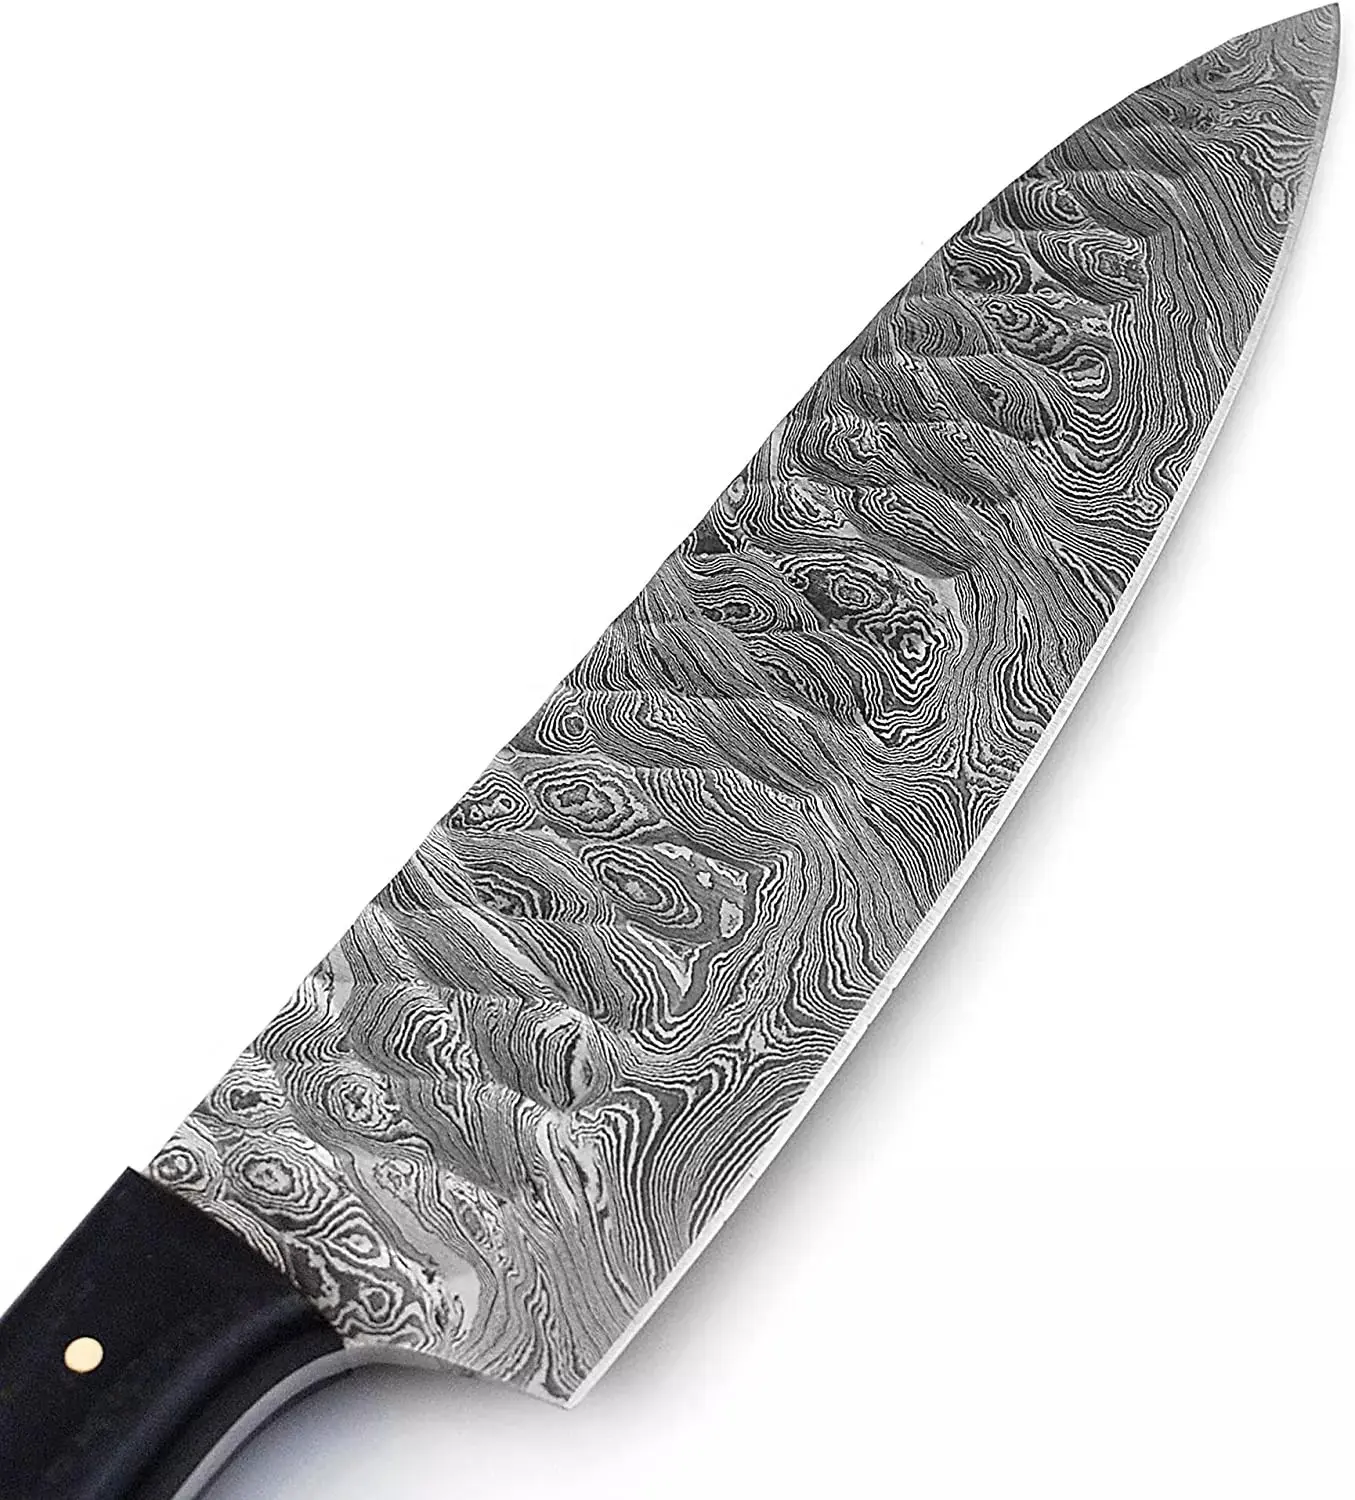 Chef Knife | Custom Handmade Damascus Steel Chef Knife with genuine Leather Sheath | Wholesale Pakistani Knife